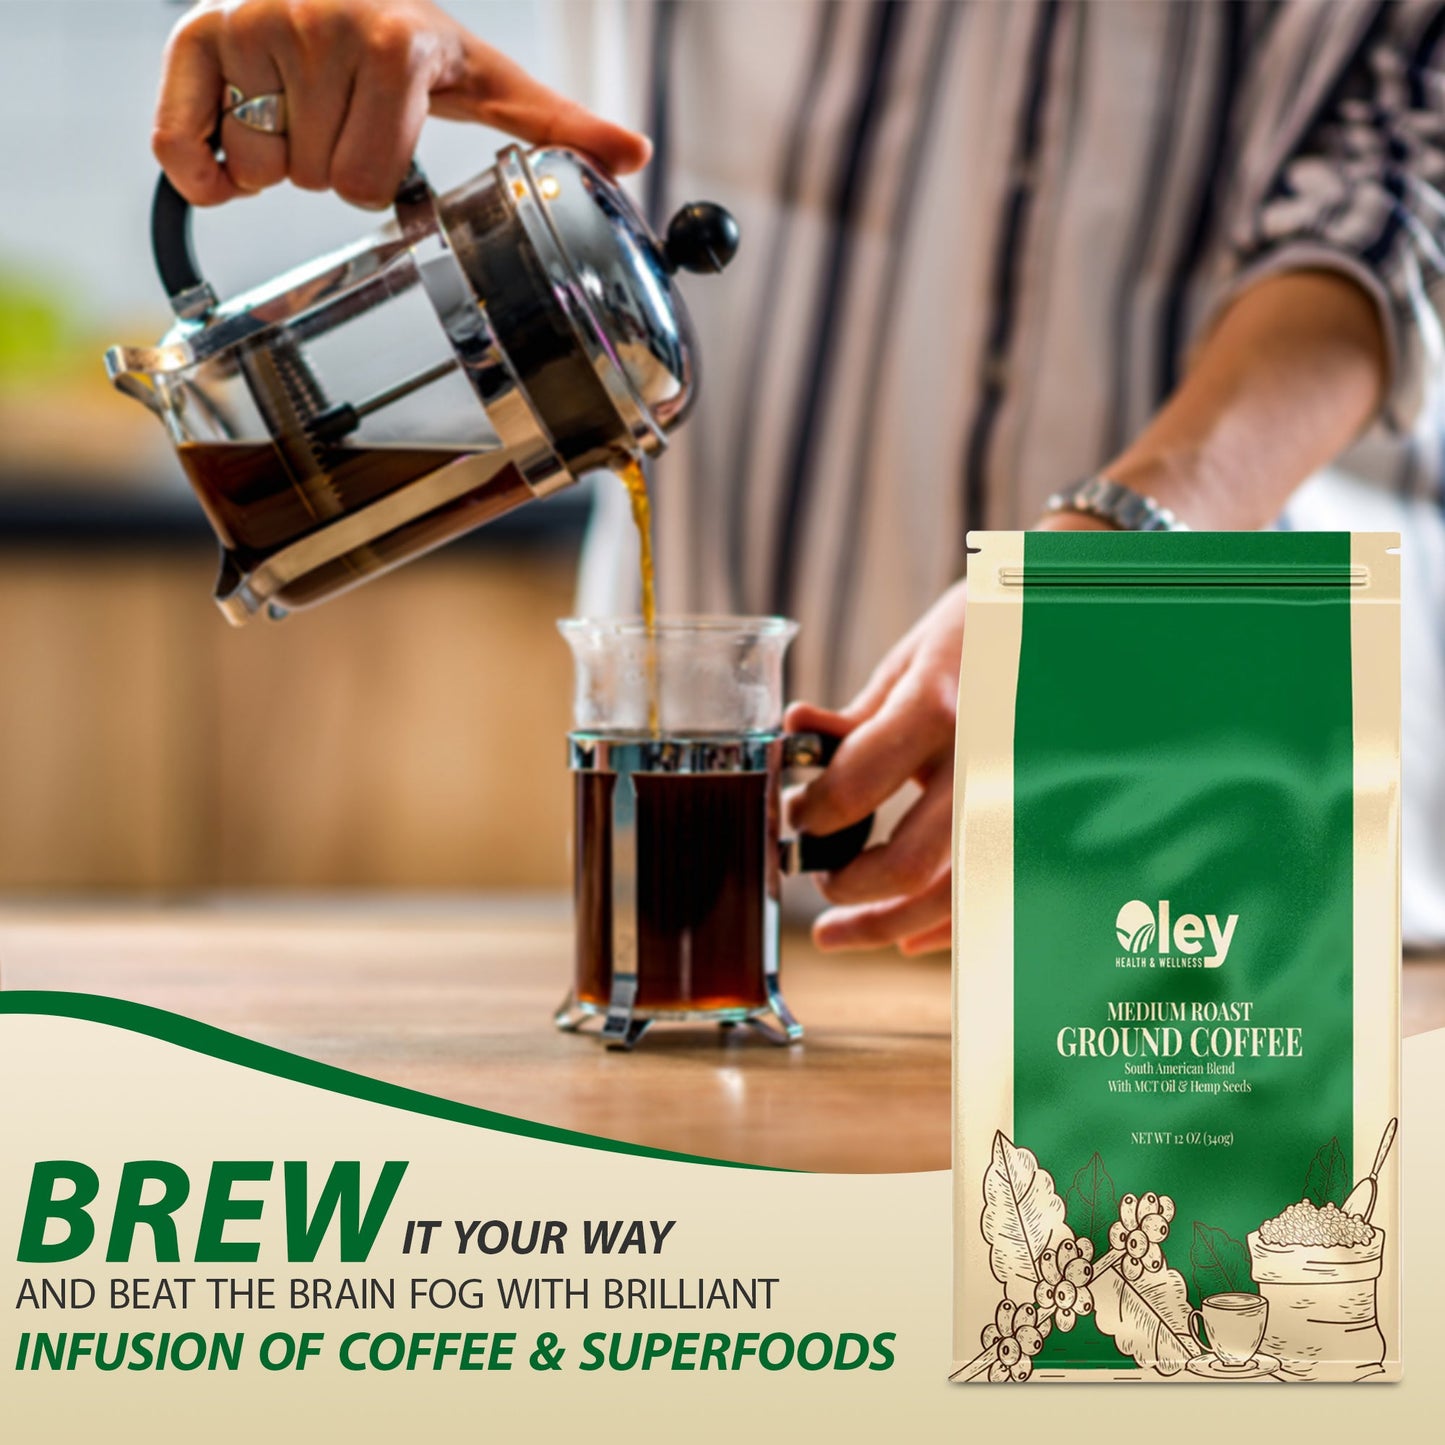 Medium Roast Ground Coffee with MCT Oil & Hemp Seeds - Oley Health and Wellness